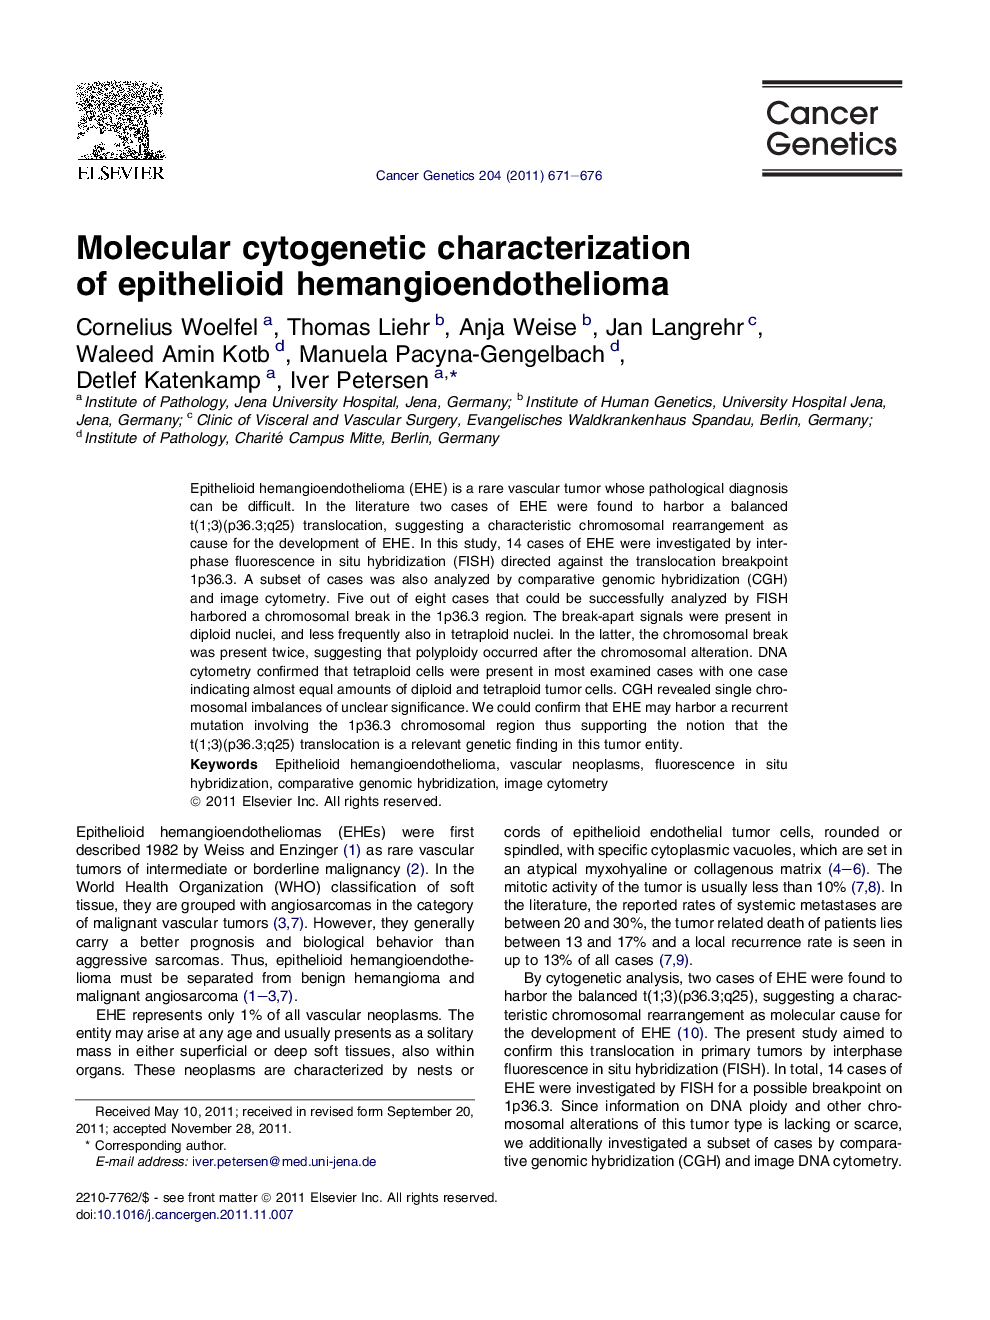 Molecular cytogenetic characterization of epithelioid hemangioendothelioma